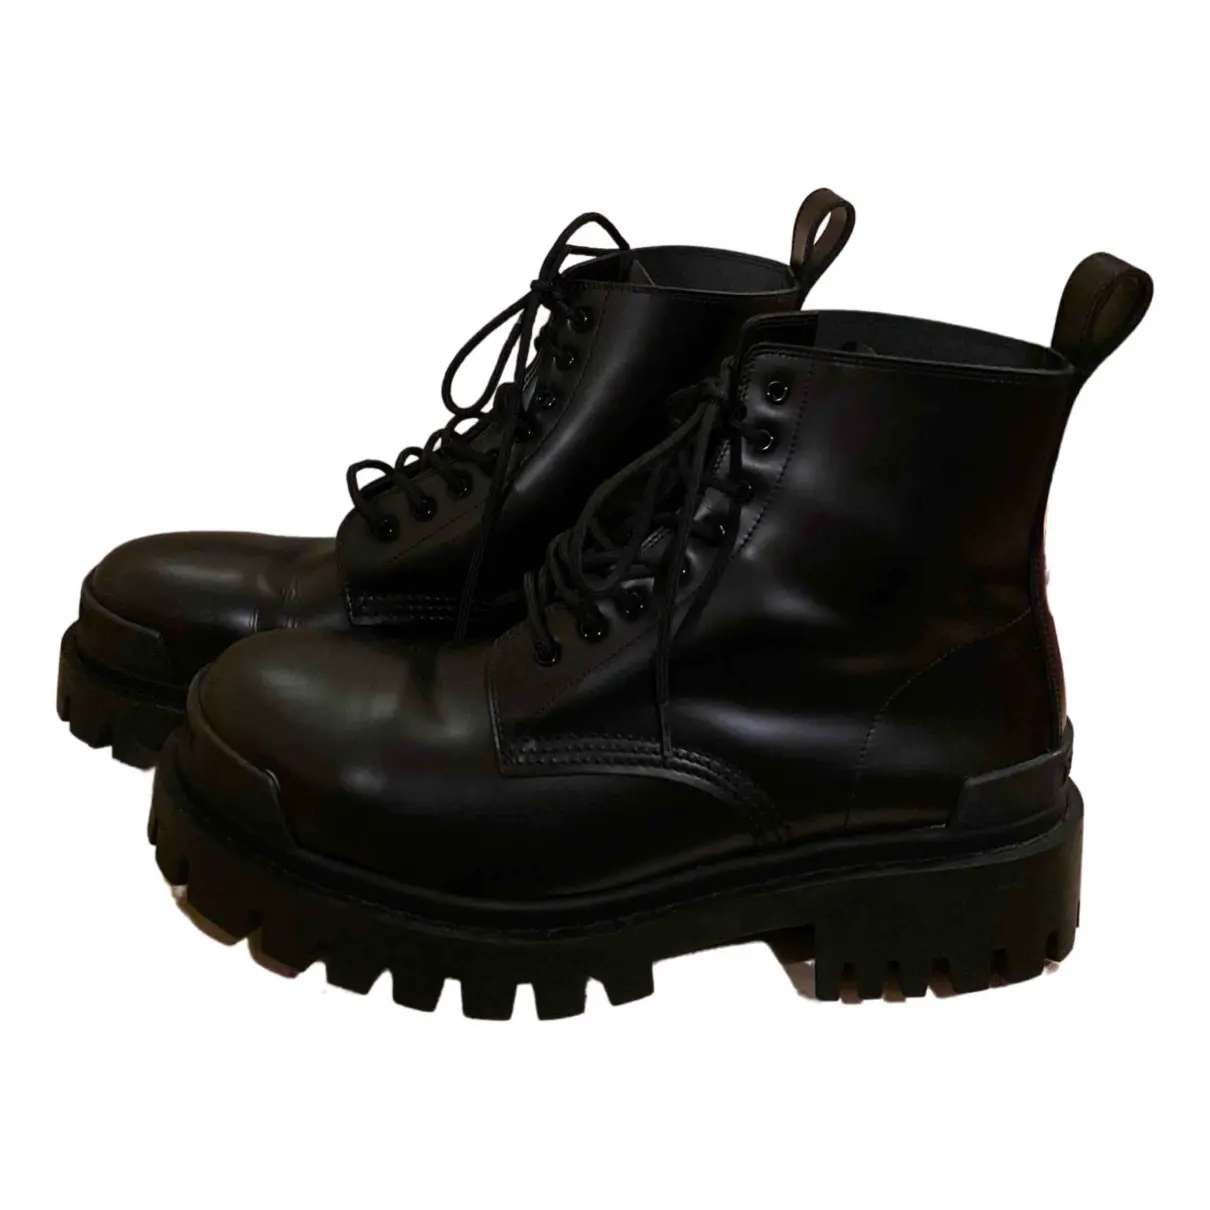 Strike leather boots Balenciaga